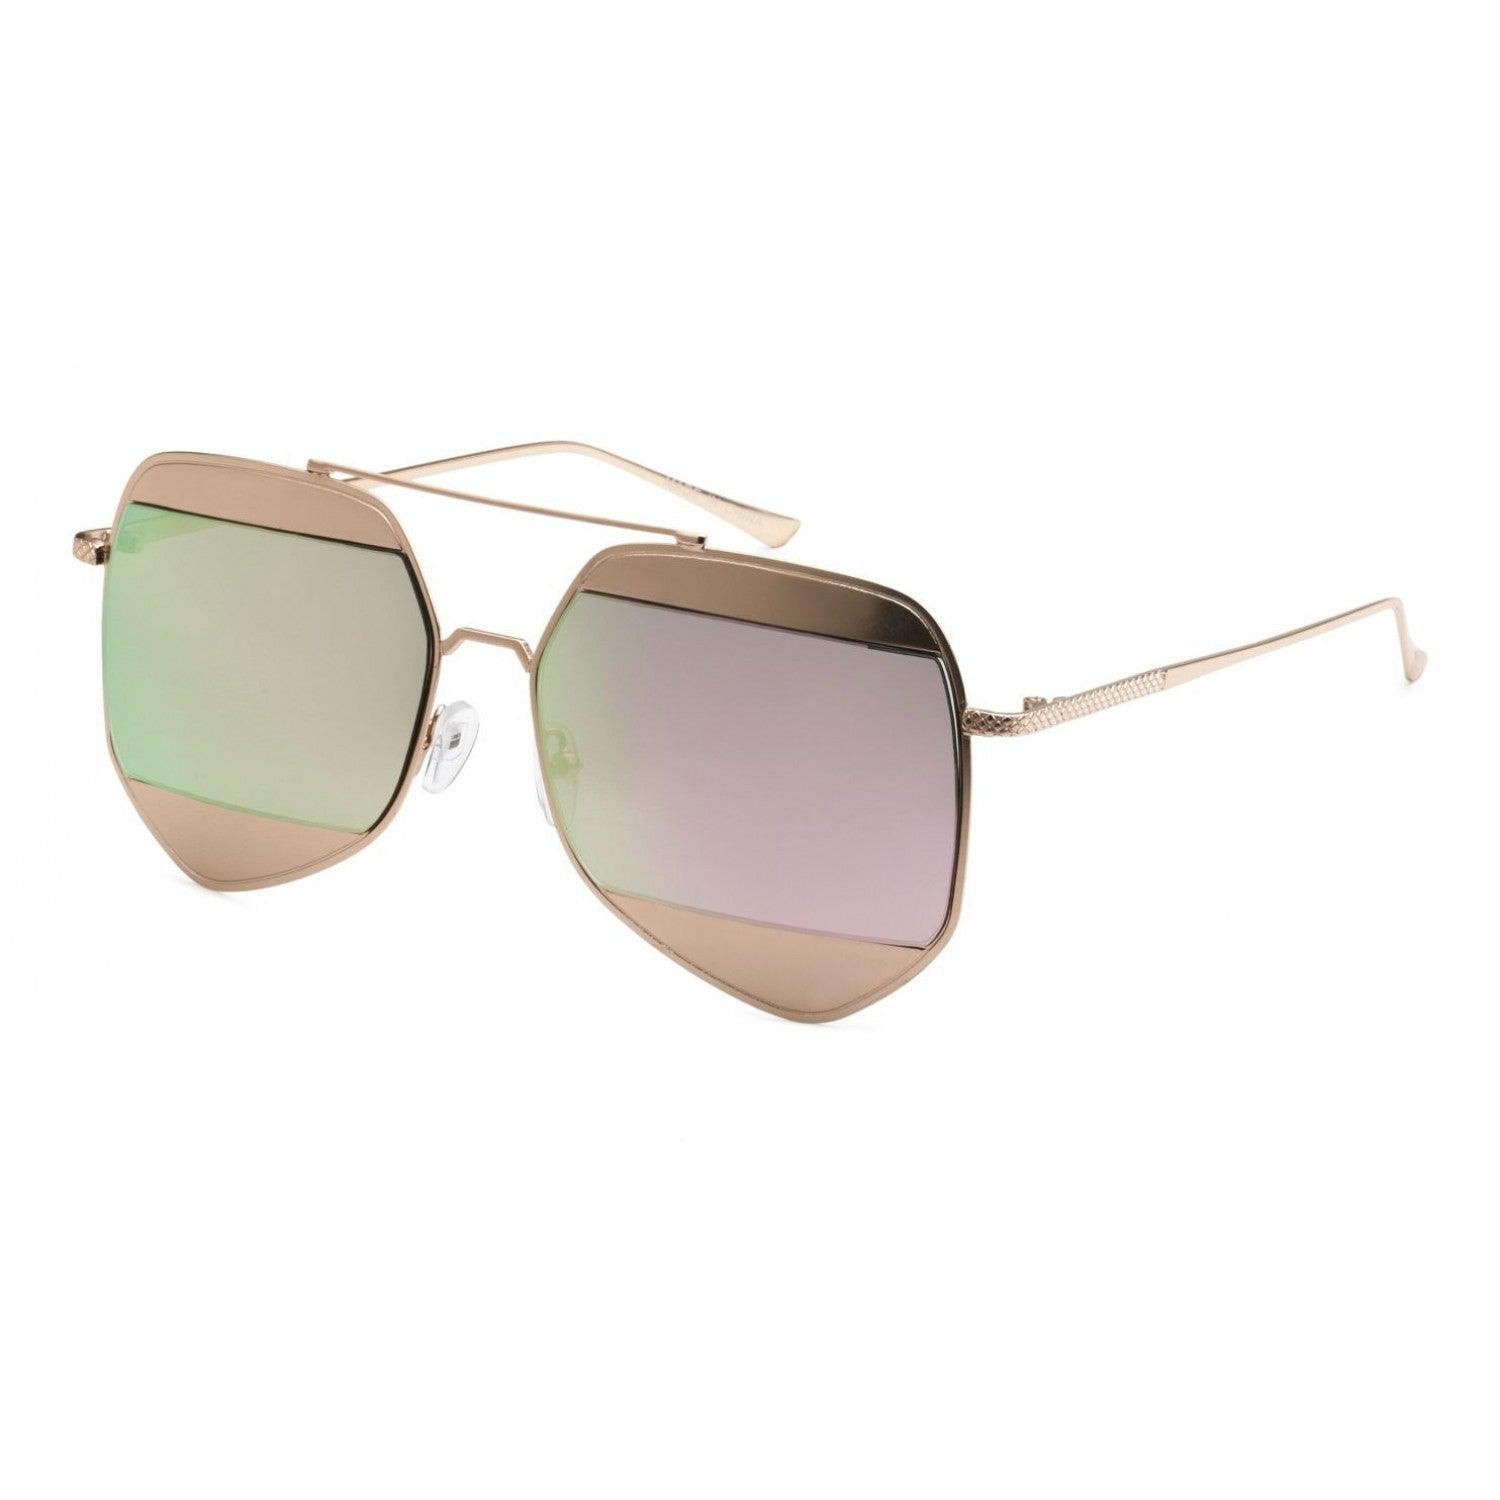 Retro Reflective Sunglasses - Weekend Shade Sunglasses